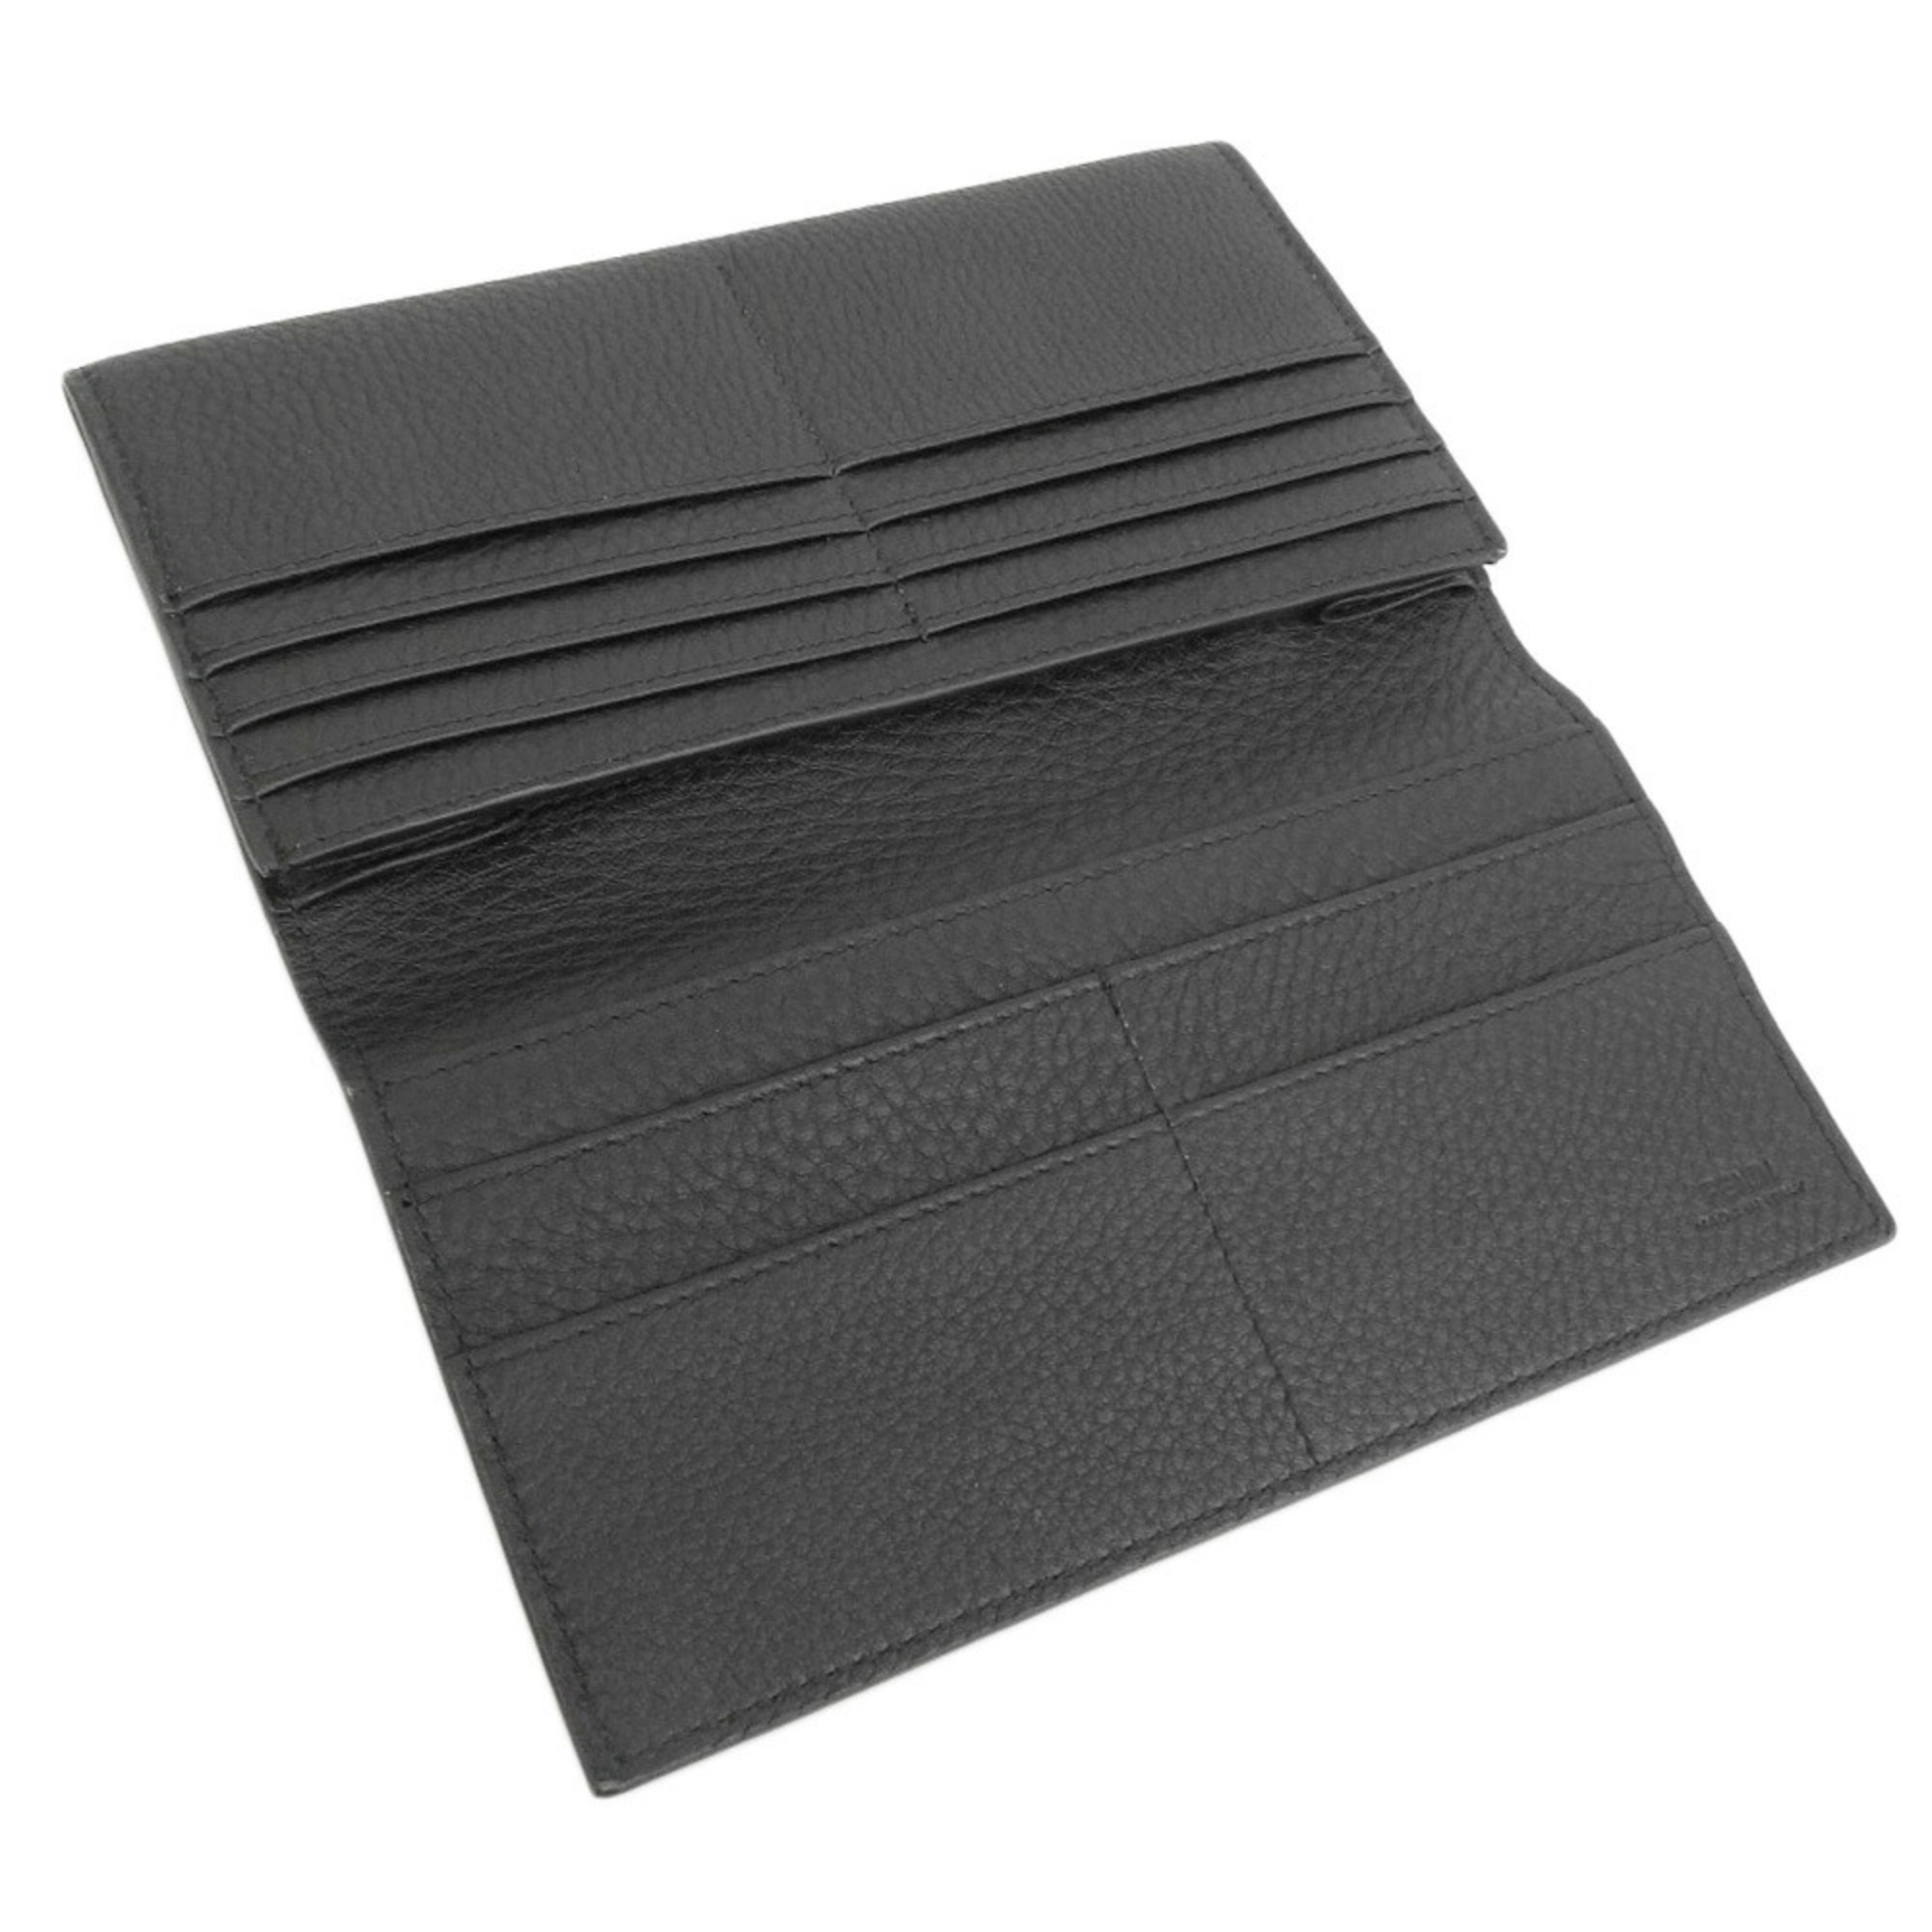 Fendi FENDI FF folio long wallet leather black